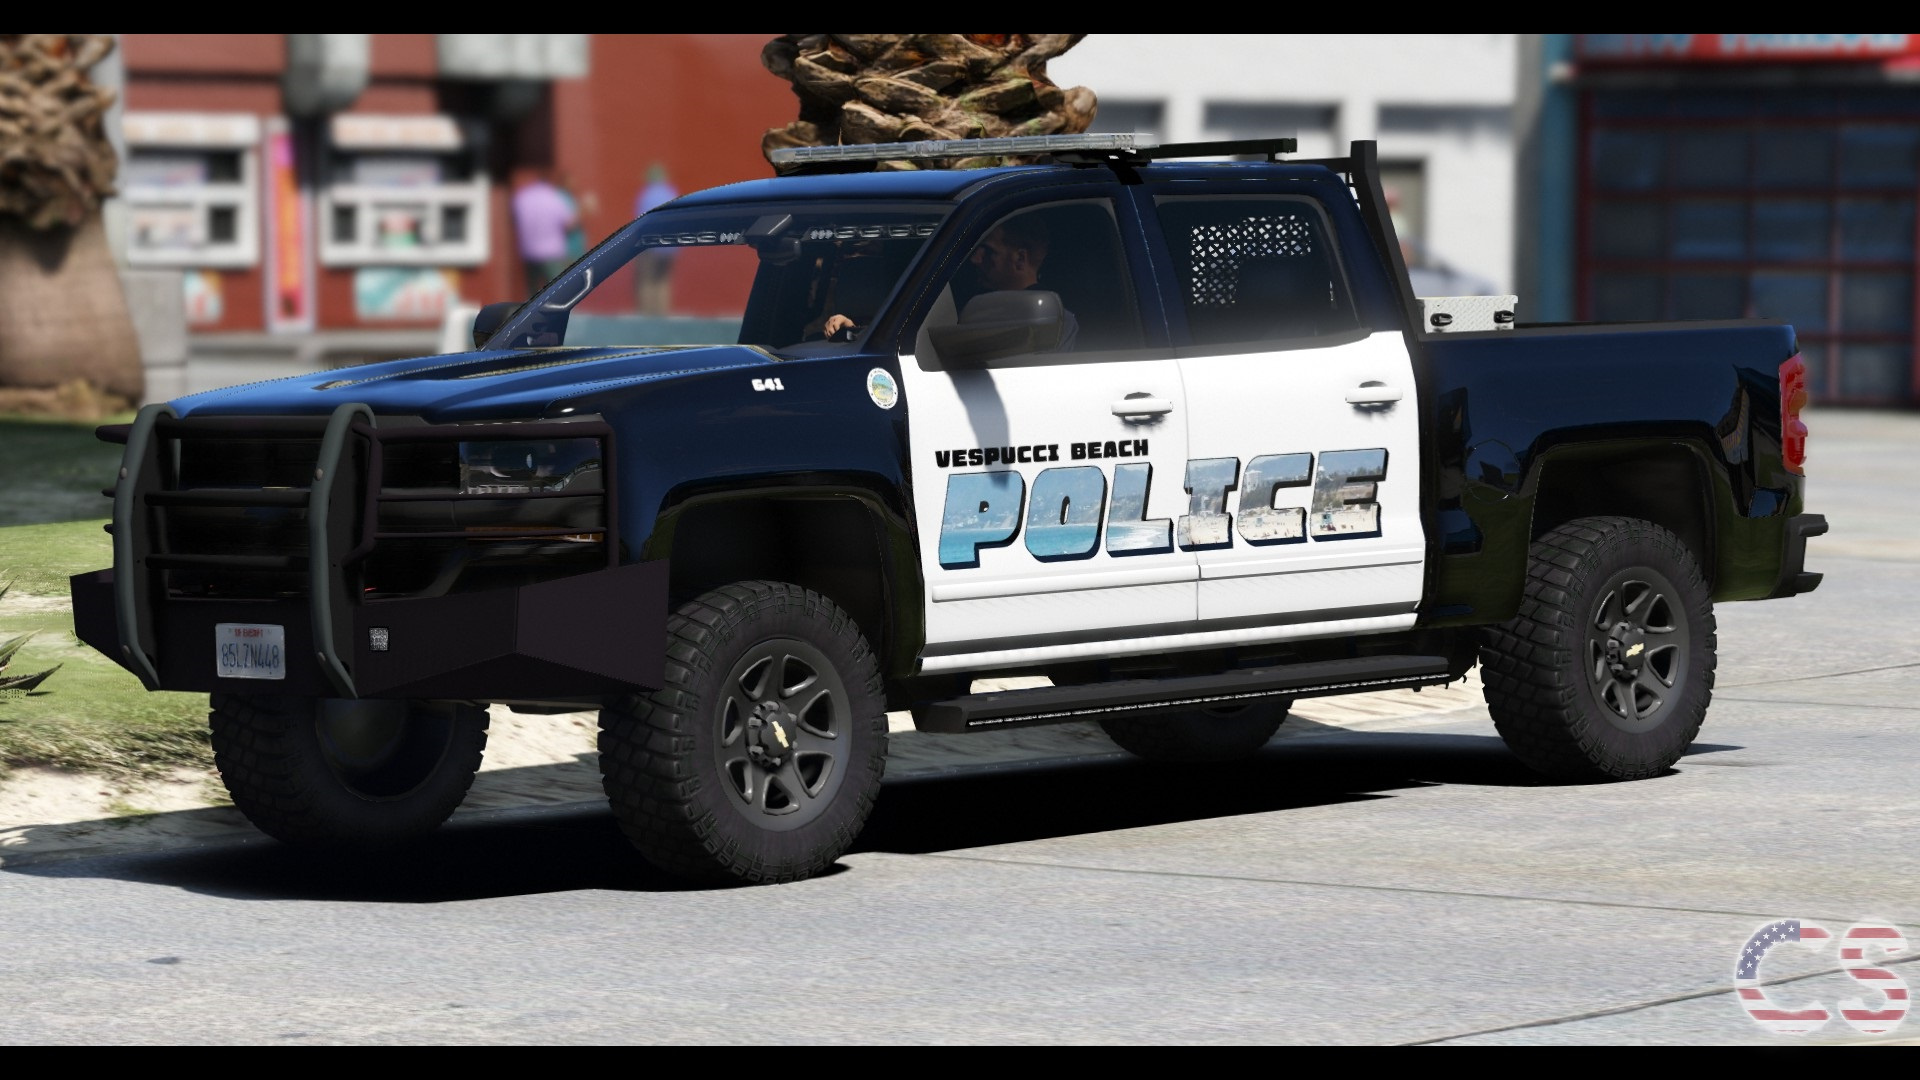 Vespucci Beach Police 2017 Chevrolet Silverado Skin - GTA5-Mods.com